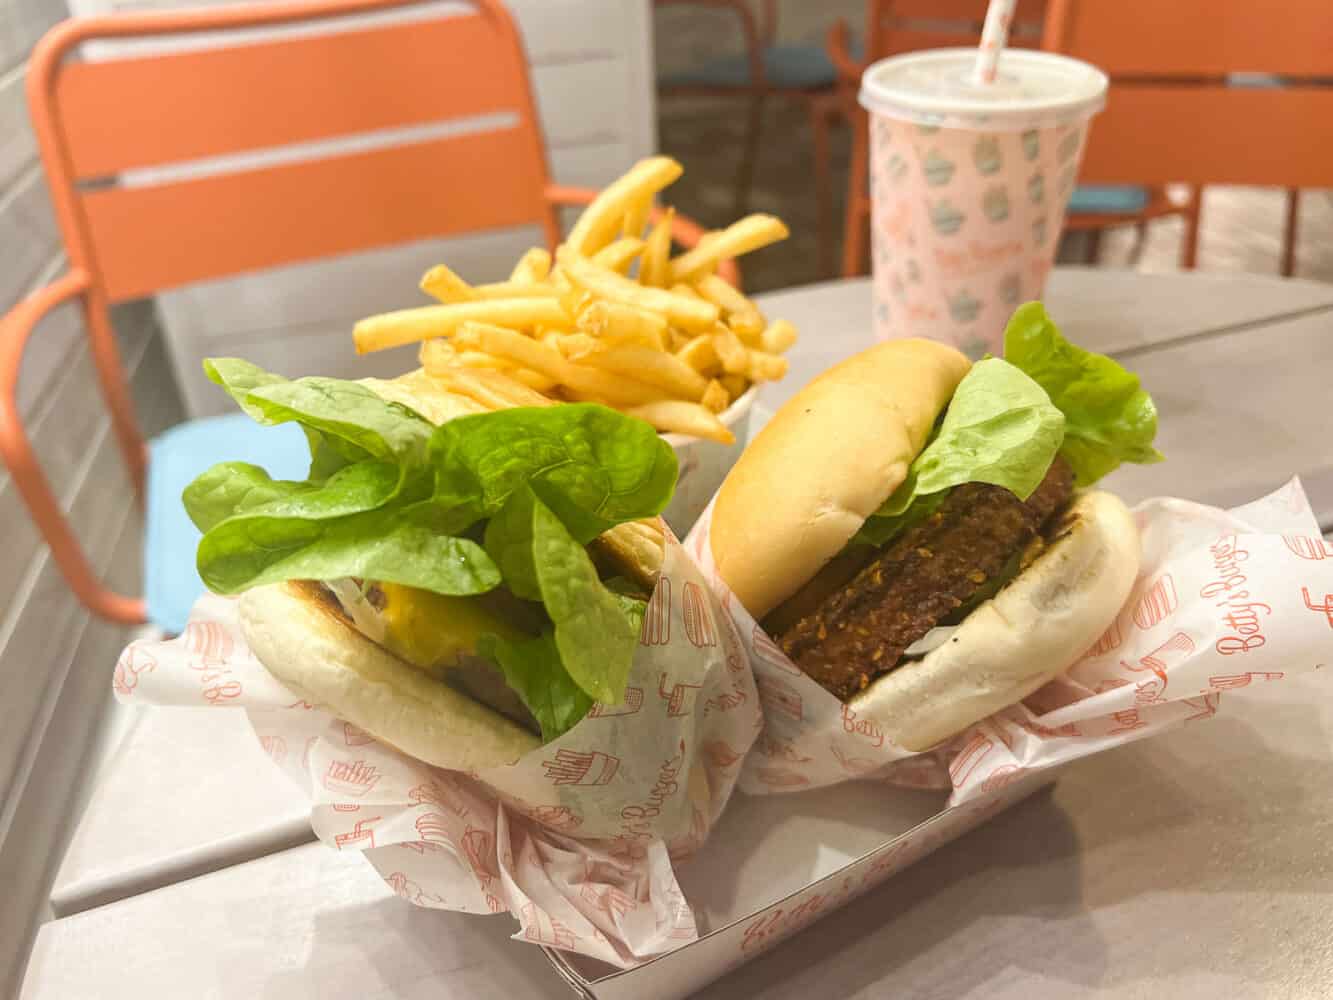 Veggie burger and fries at Bettys Burger, Noosa, Queensland, Australia